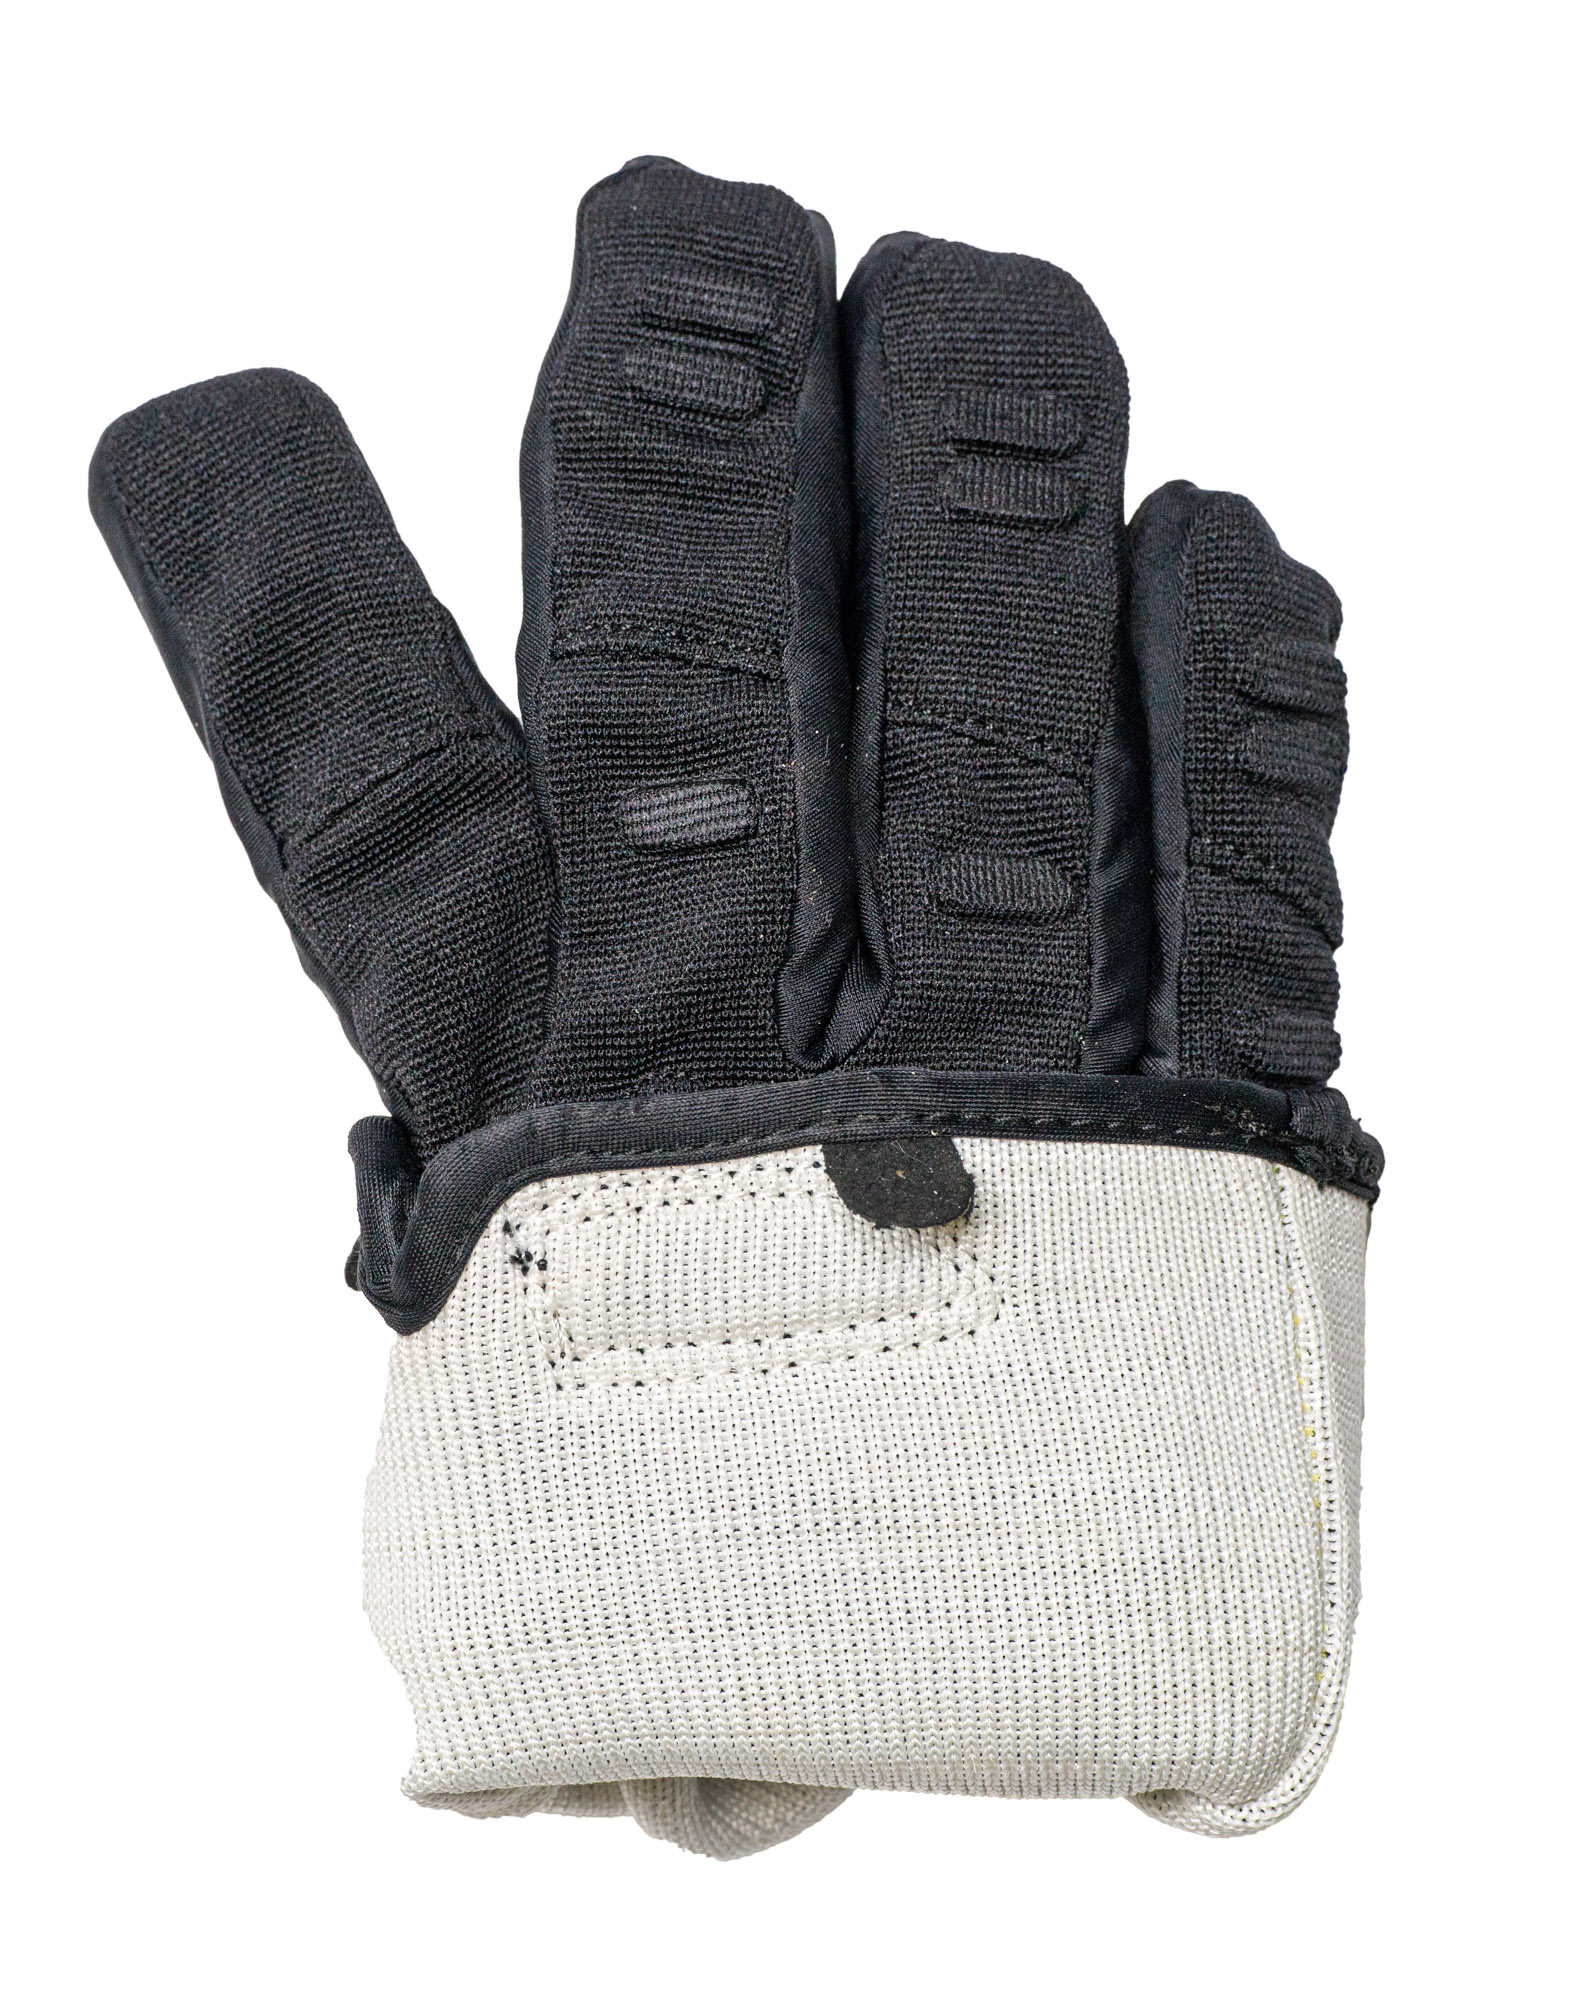 Protective Glove "Quantum 100"